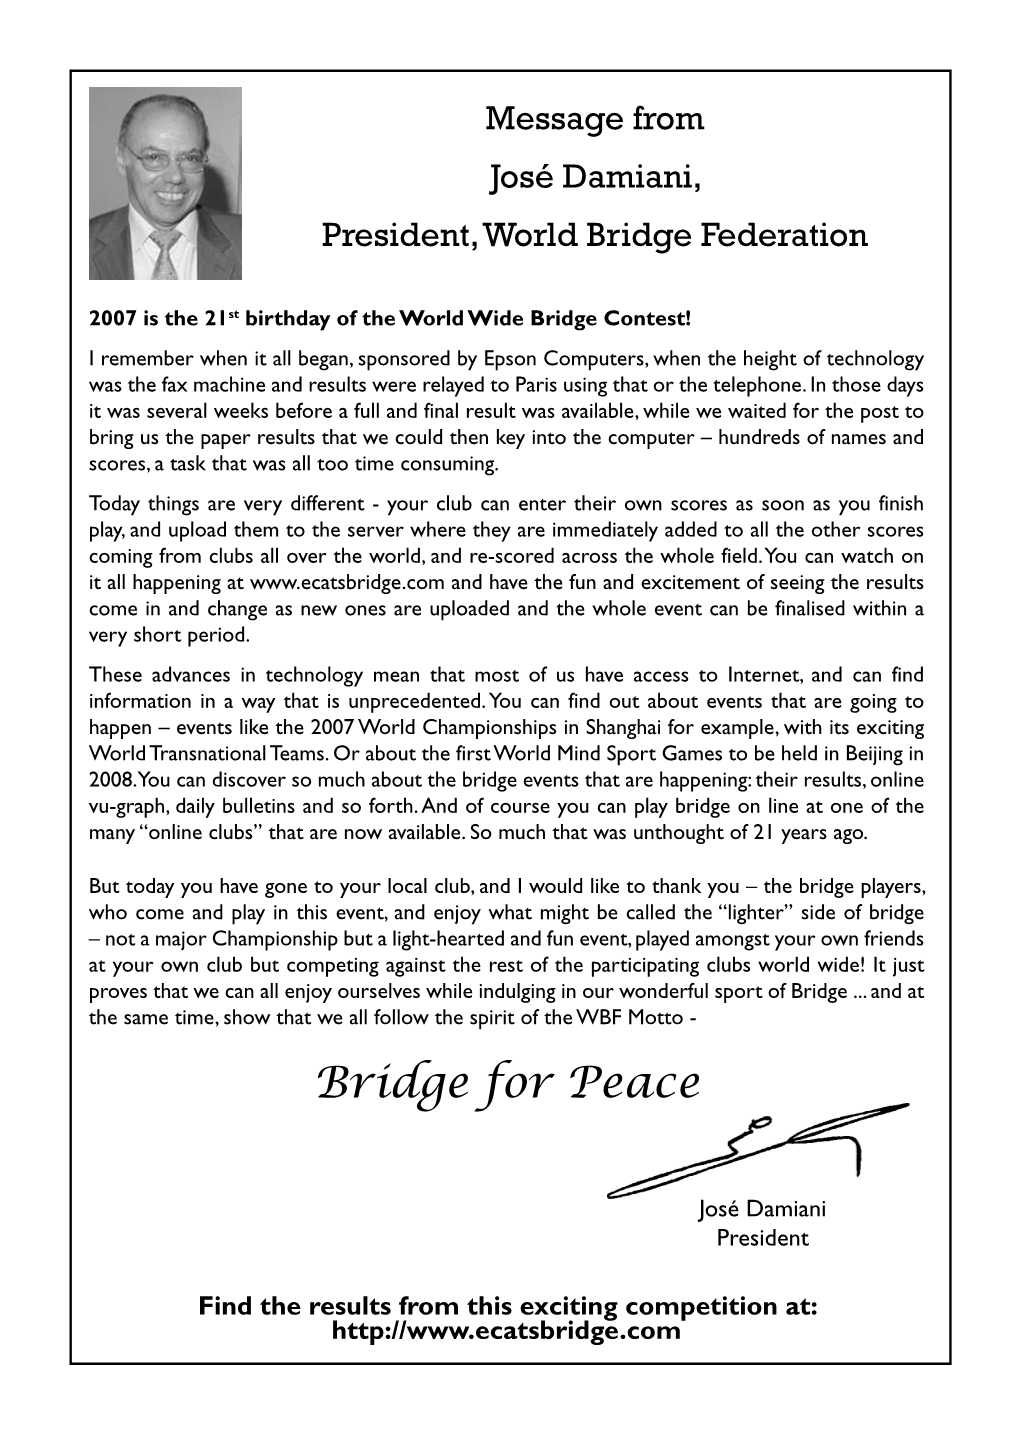 Bridge for Peace